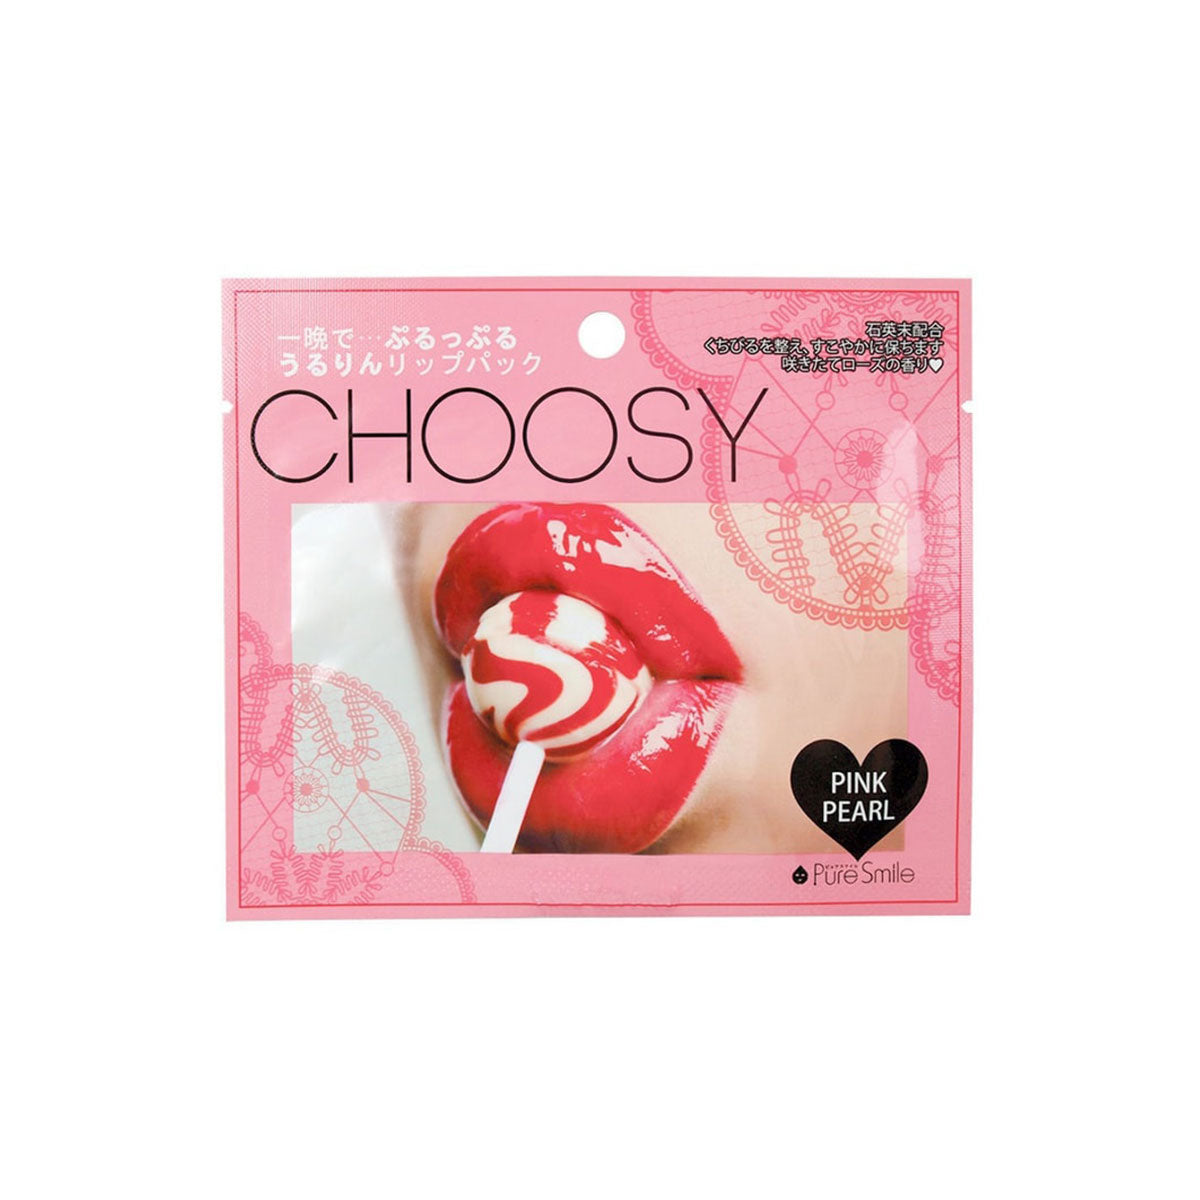 Pure Smile Choosy Lip Care Sheet Mask #Pink Pearl 1pcs